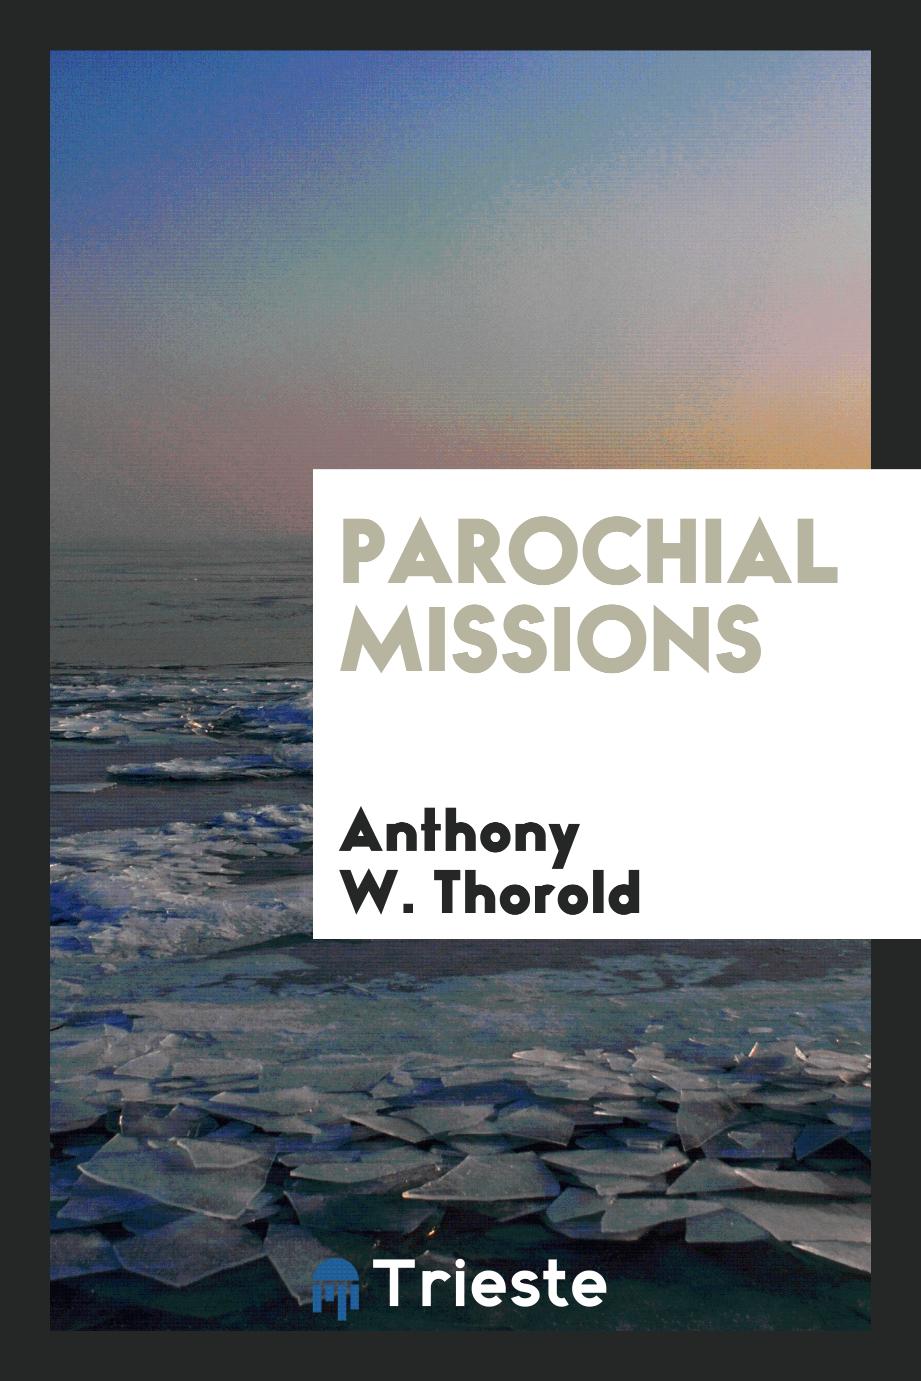 Parochial missions